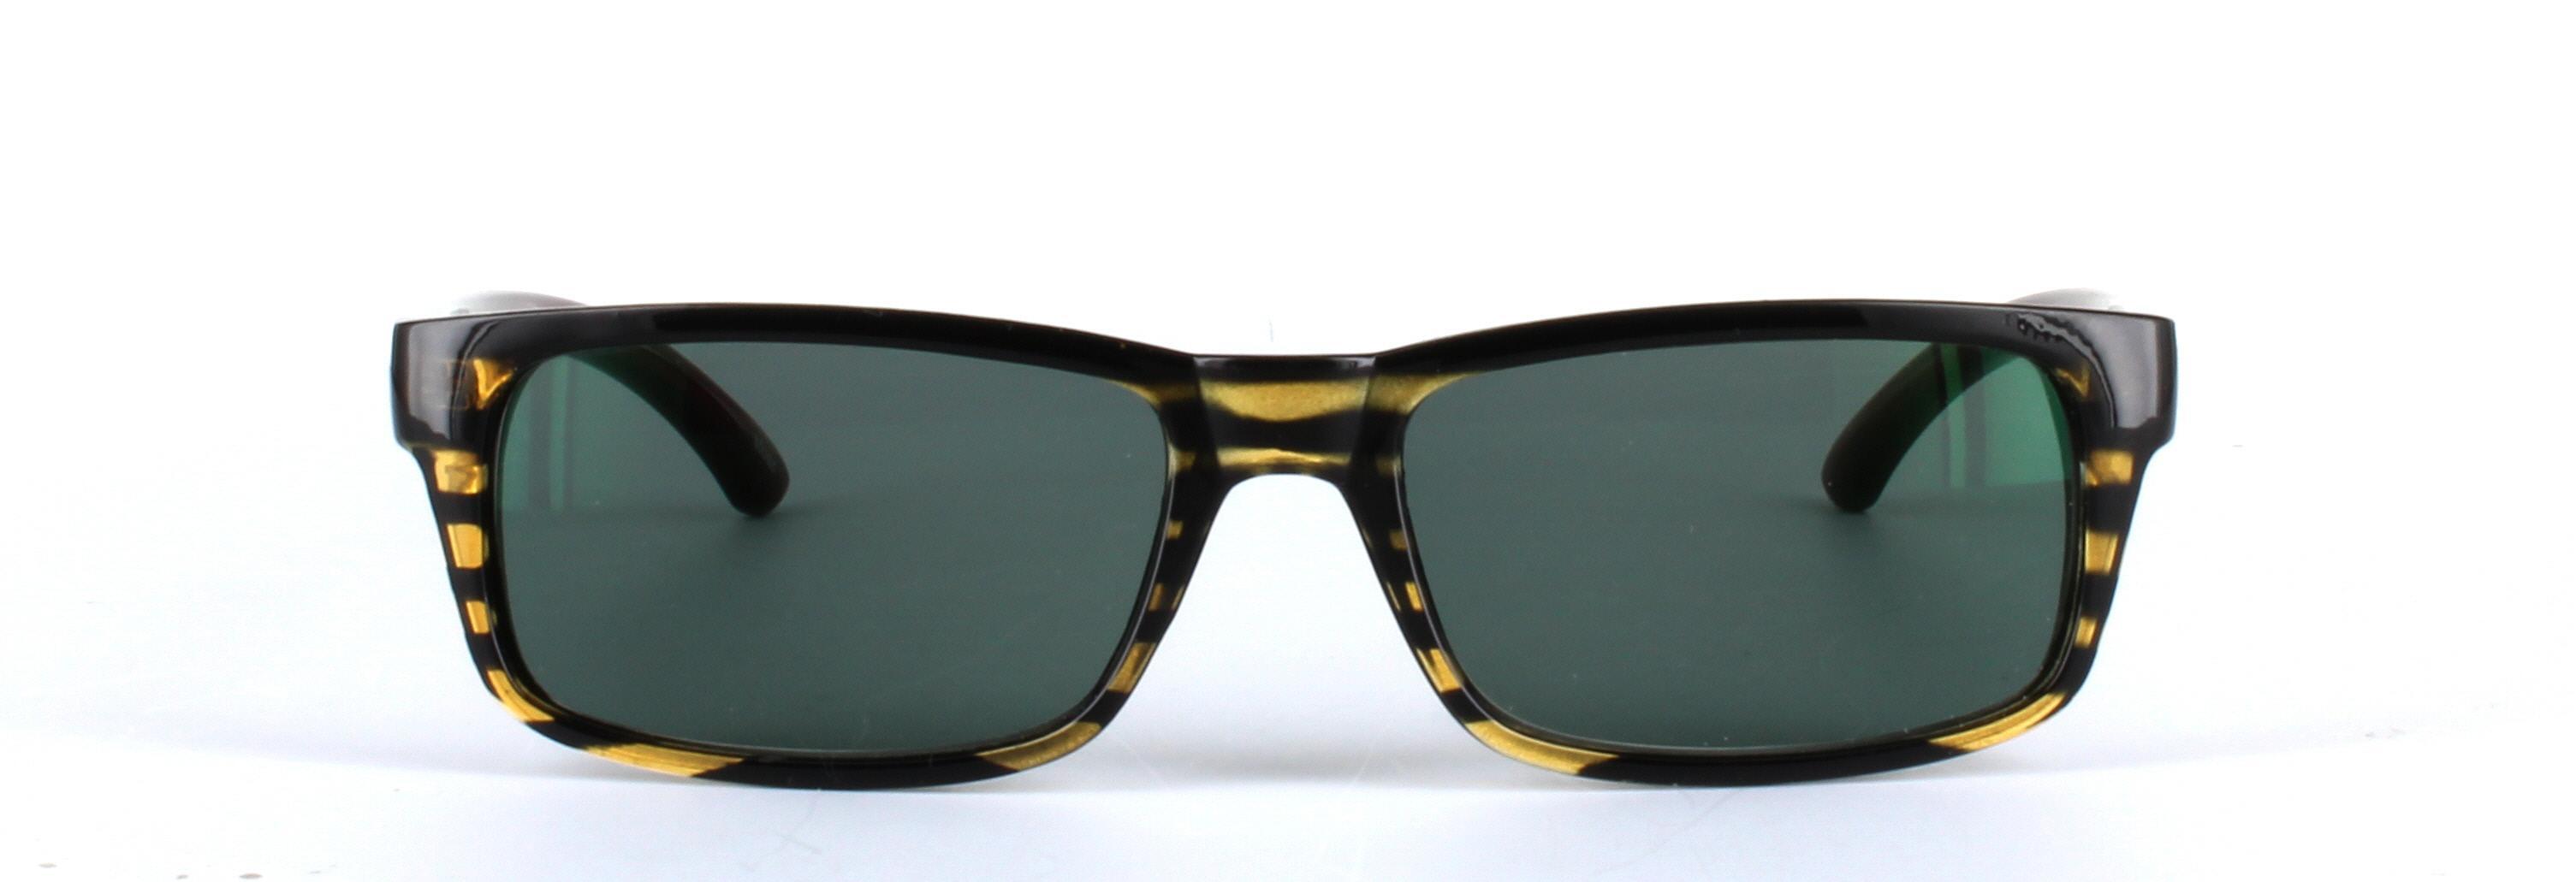 ICY 160 Brown Full Rim Rectangular Plastic Prescription Sunglasses - Image View 5